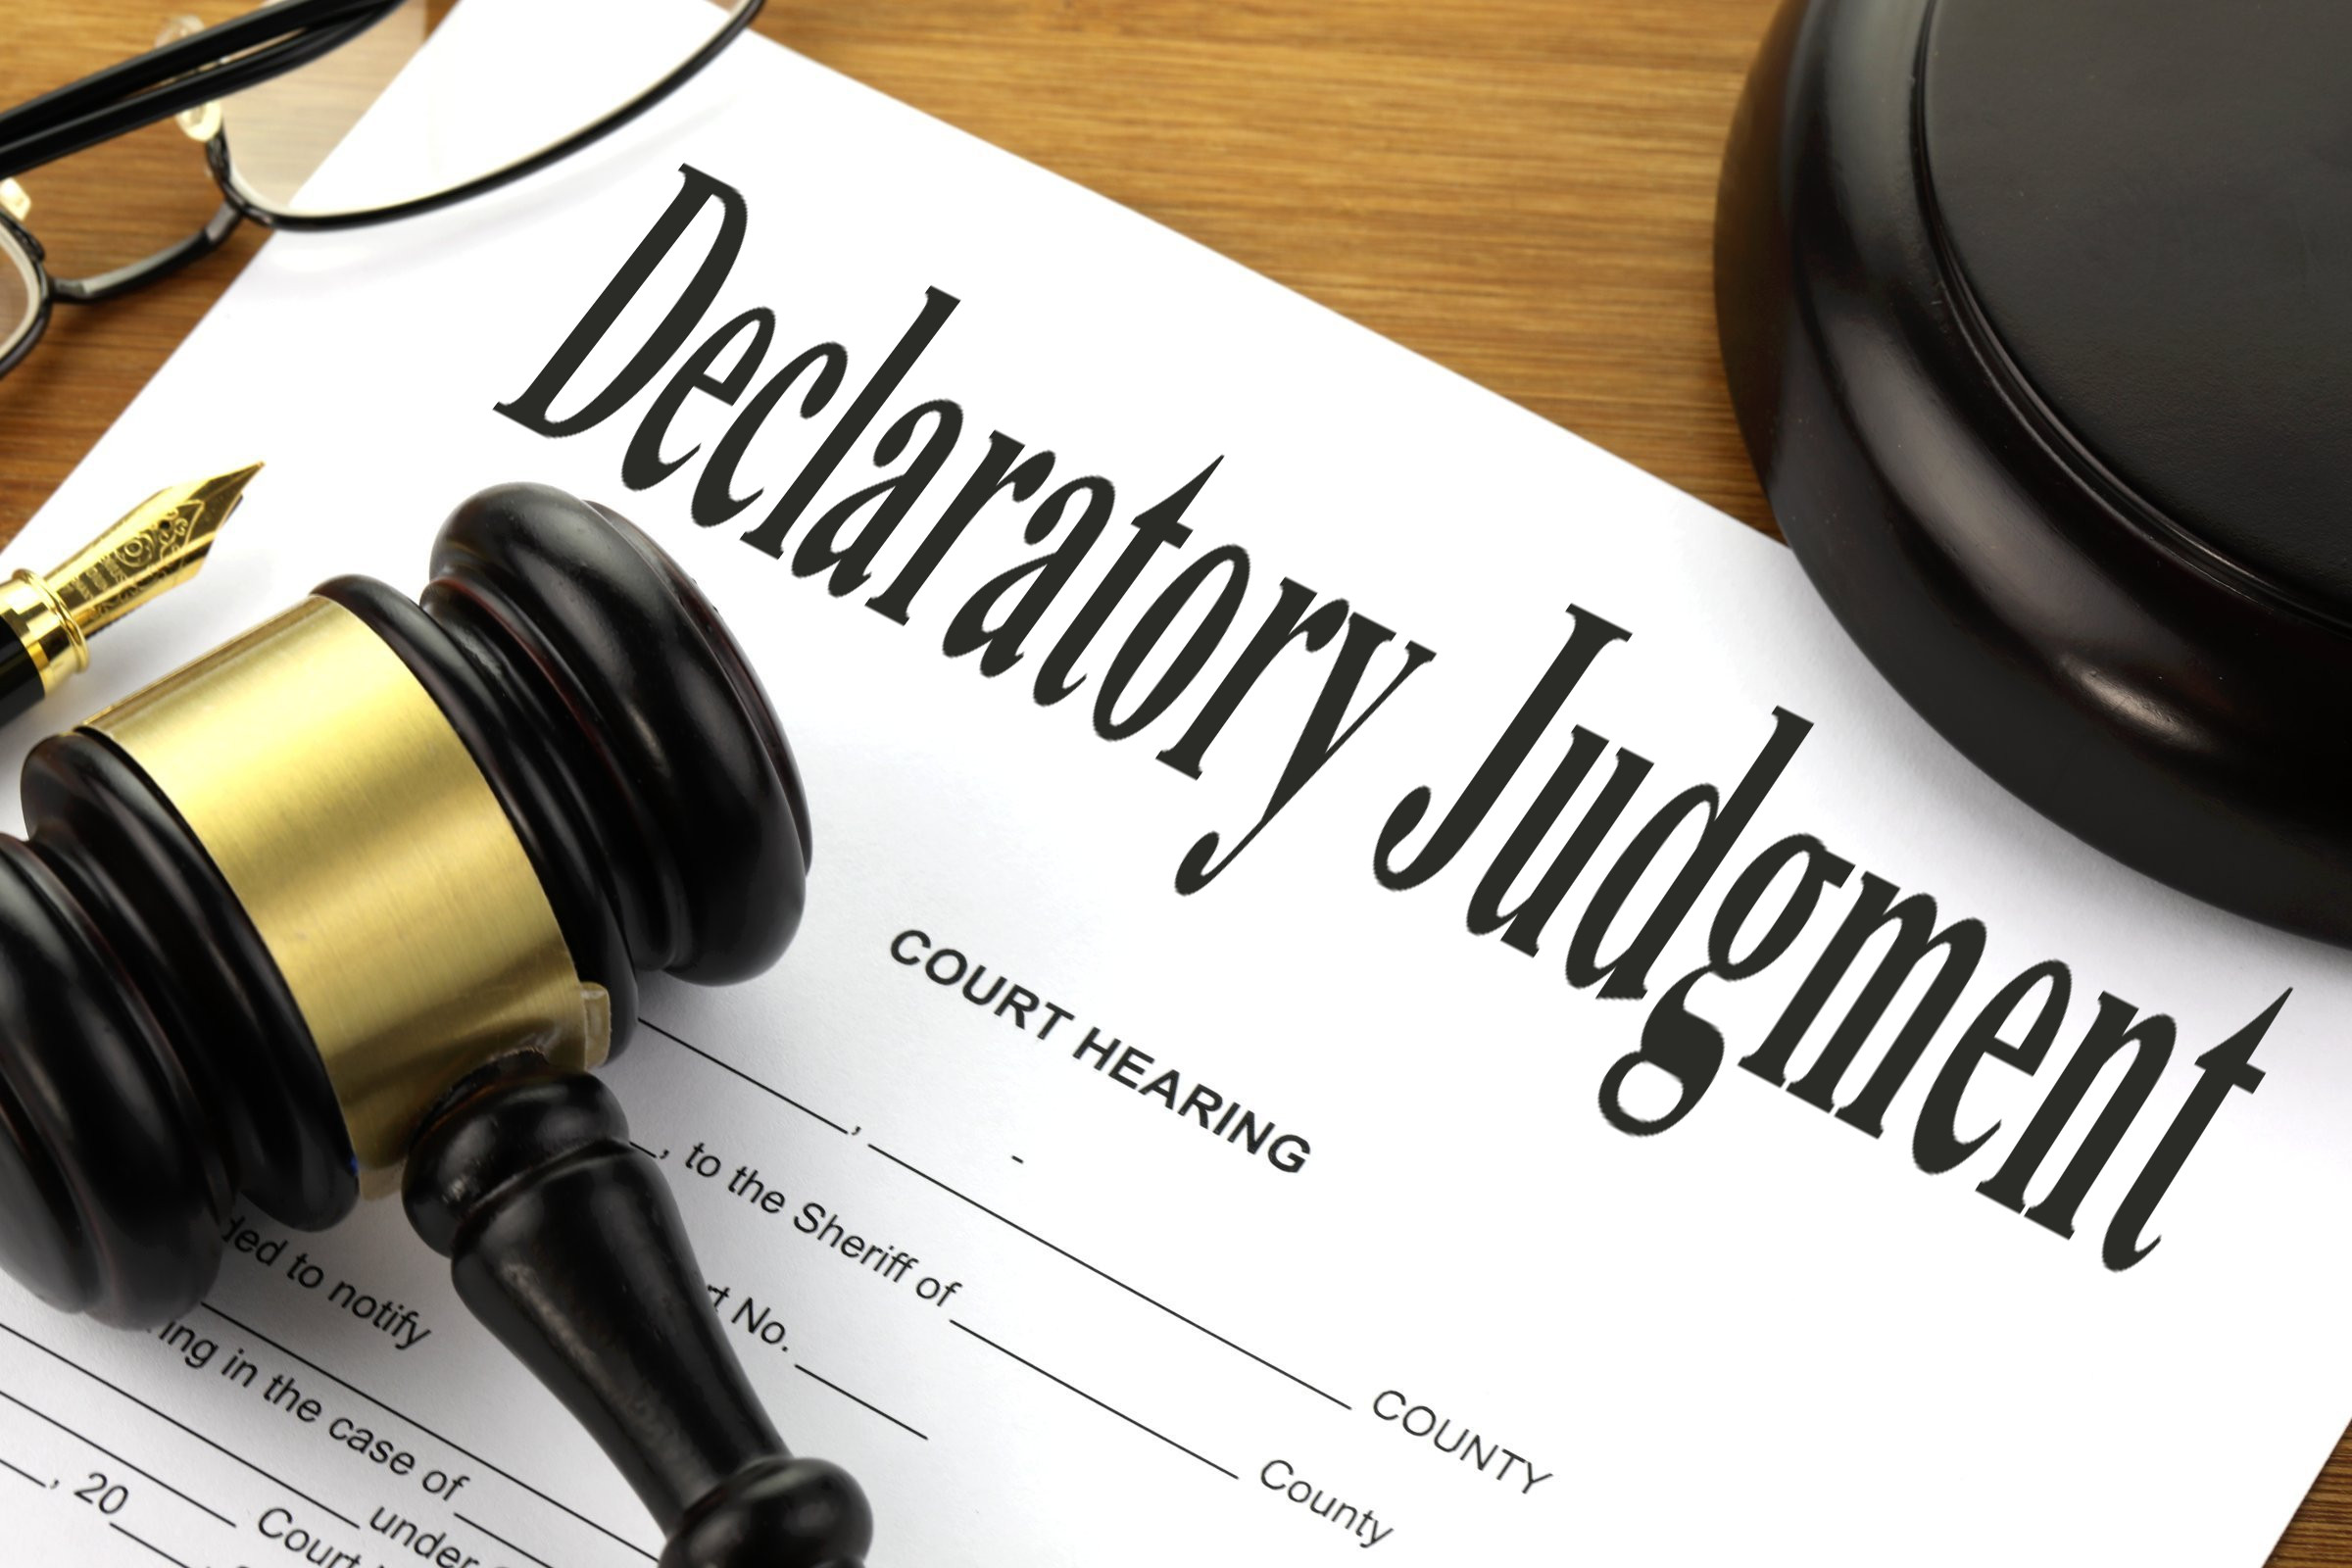 Declaratory Judgment